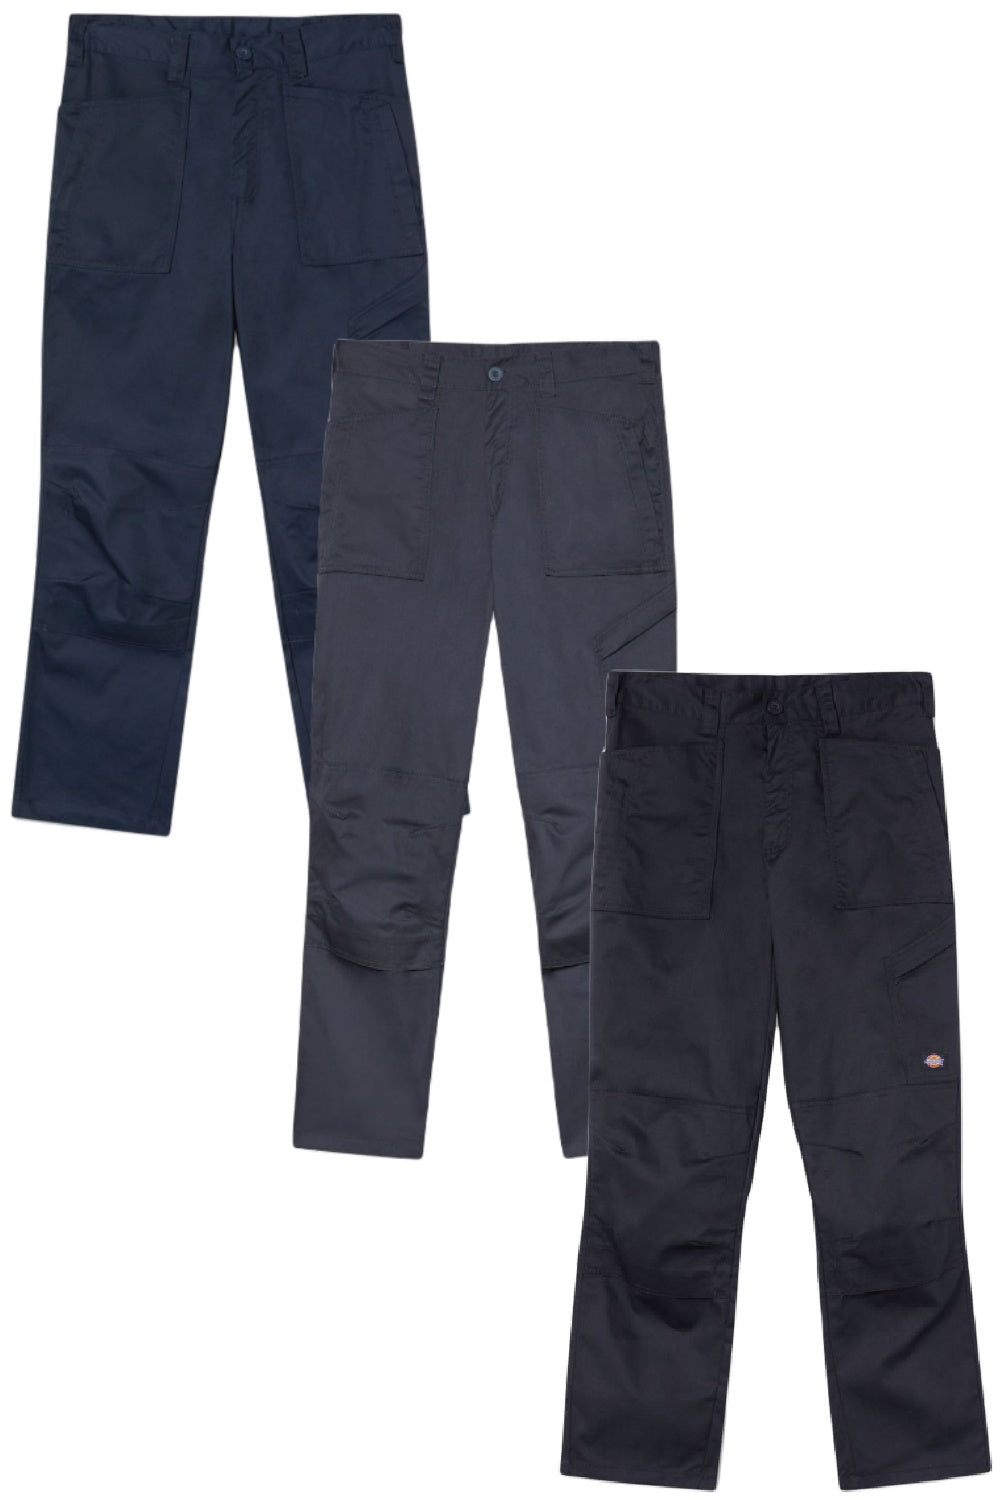 Dickies Action Flex Trousers in Navy Blue, Grey, Black